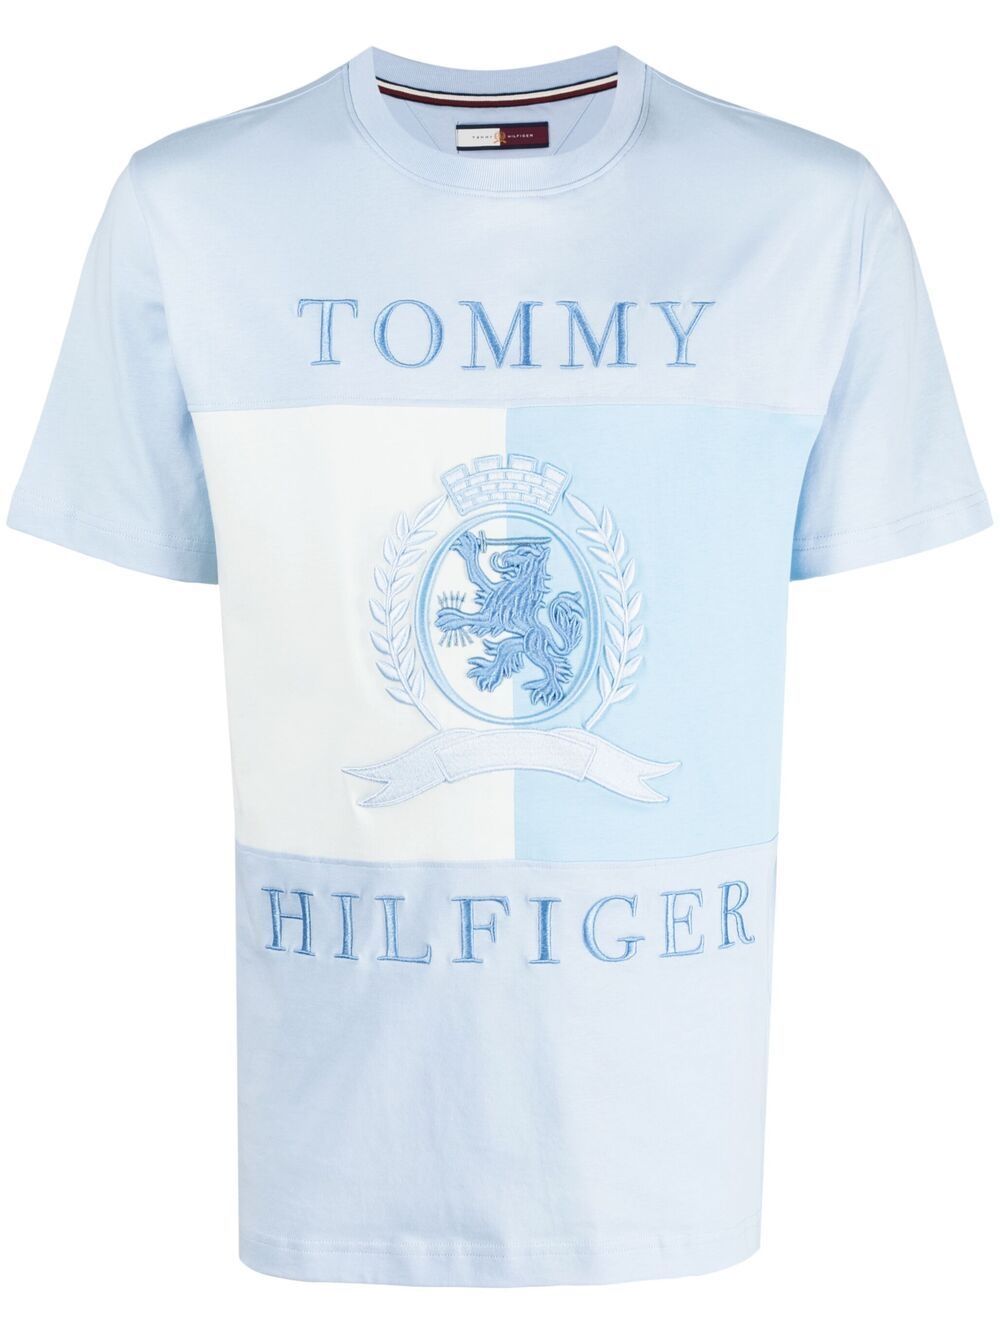 tommy hilfiger crest t shirt